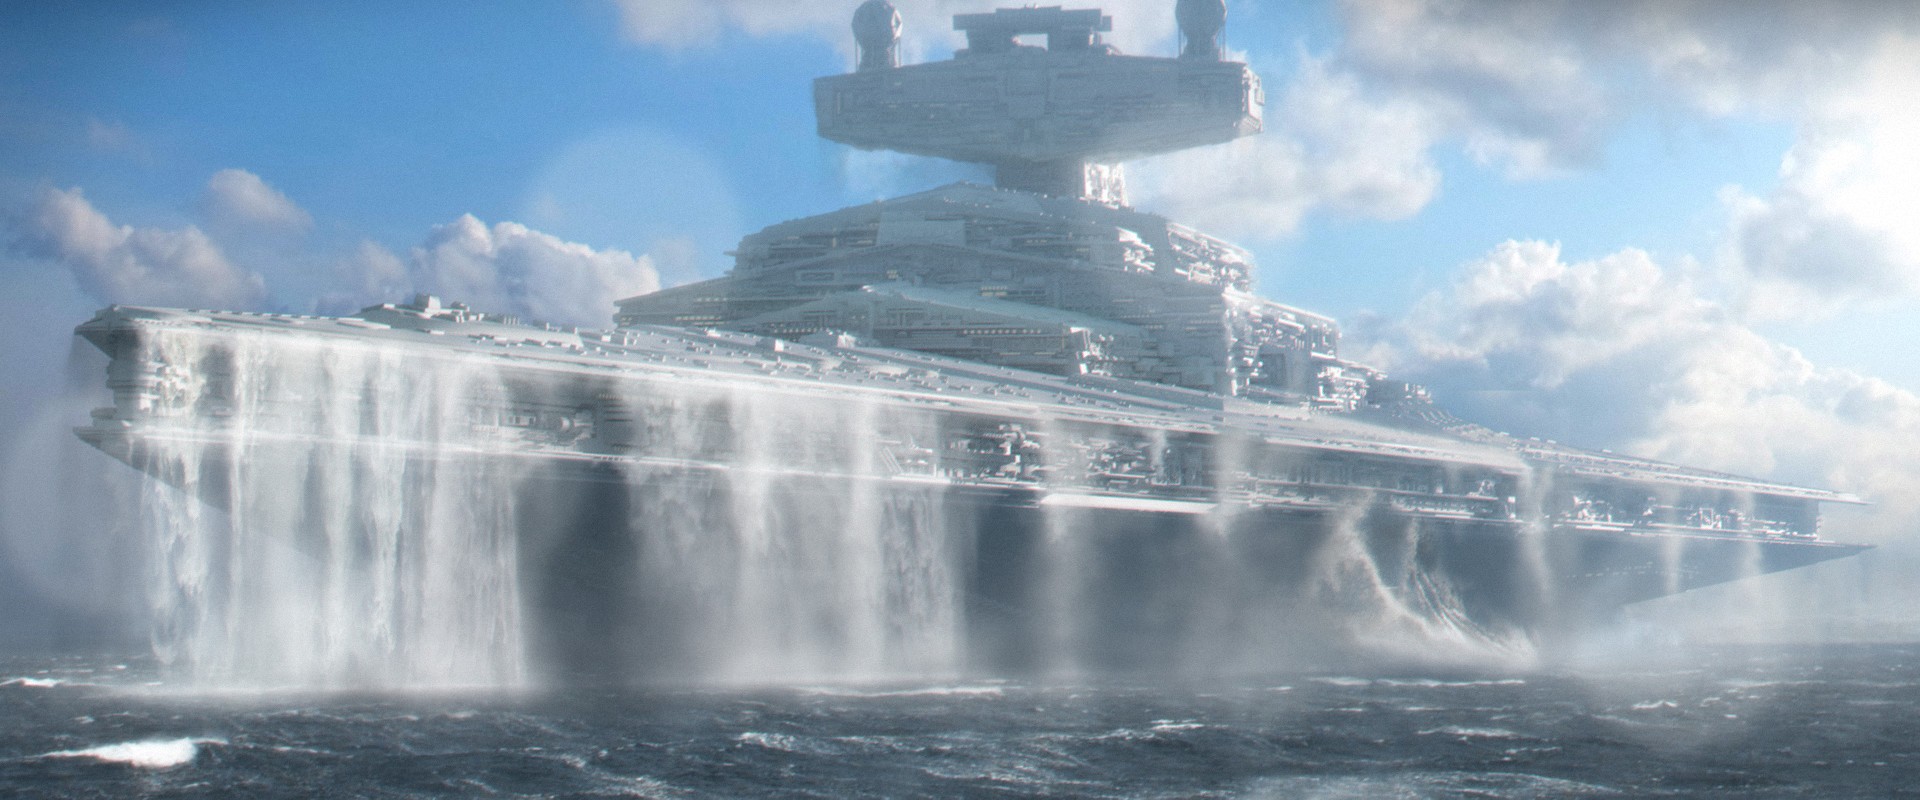 General 1920x800 Star Wars Star Destroyer science fiction digital art sea water